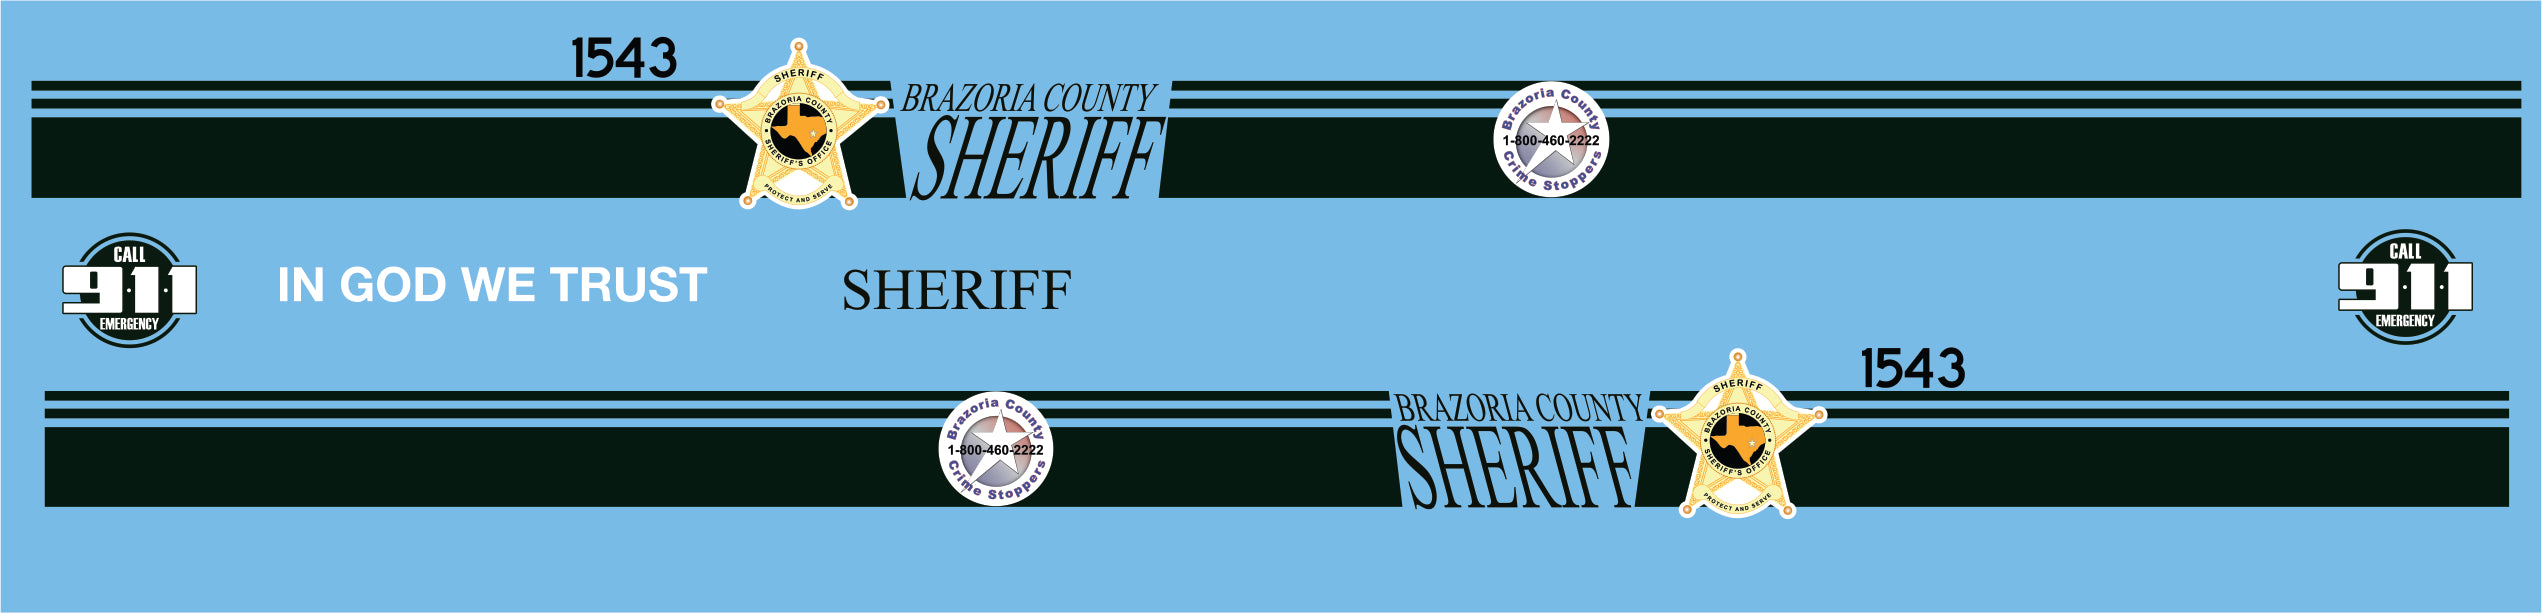 1/24 Brazoria County Texas Sheriff's Department Police waterslide decals